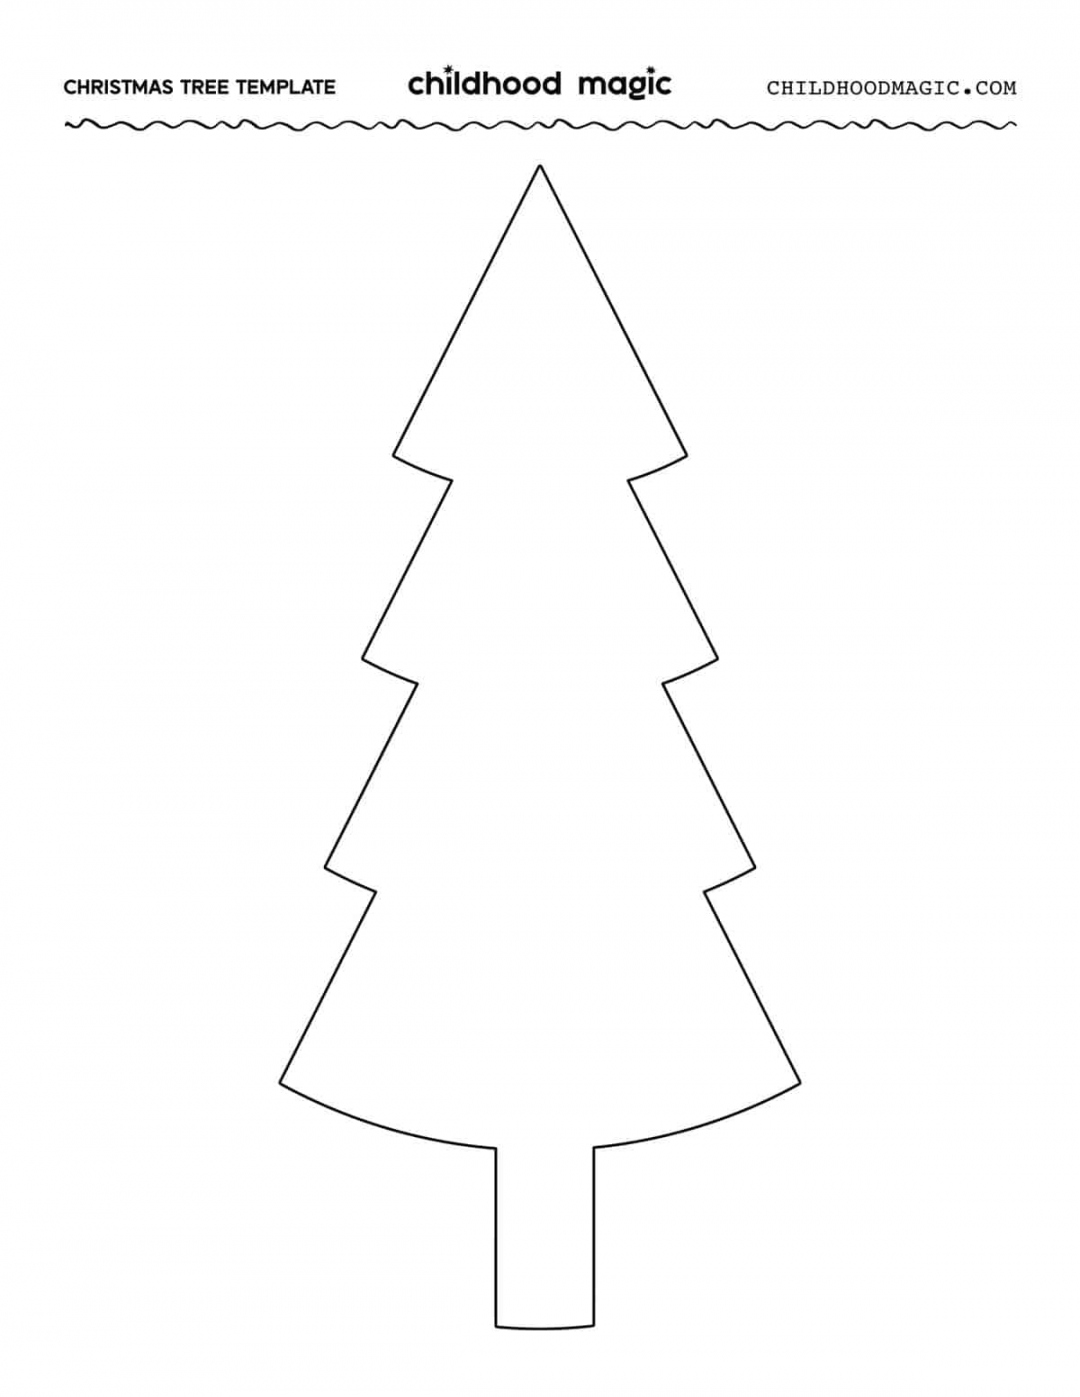 Christmas Tree Template - Free Printables - Childhood Magic - FREE Printables - Christmas Tree Template